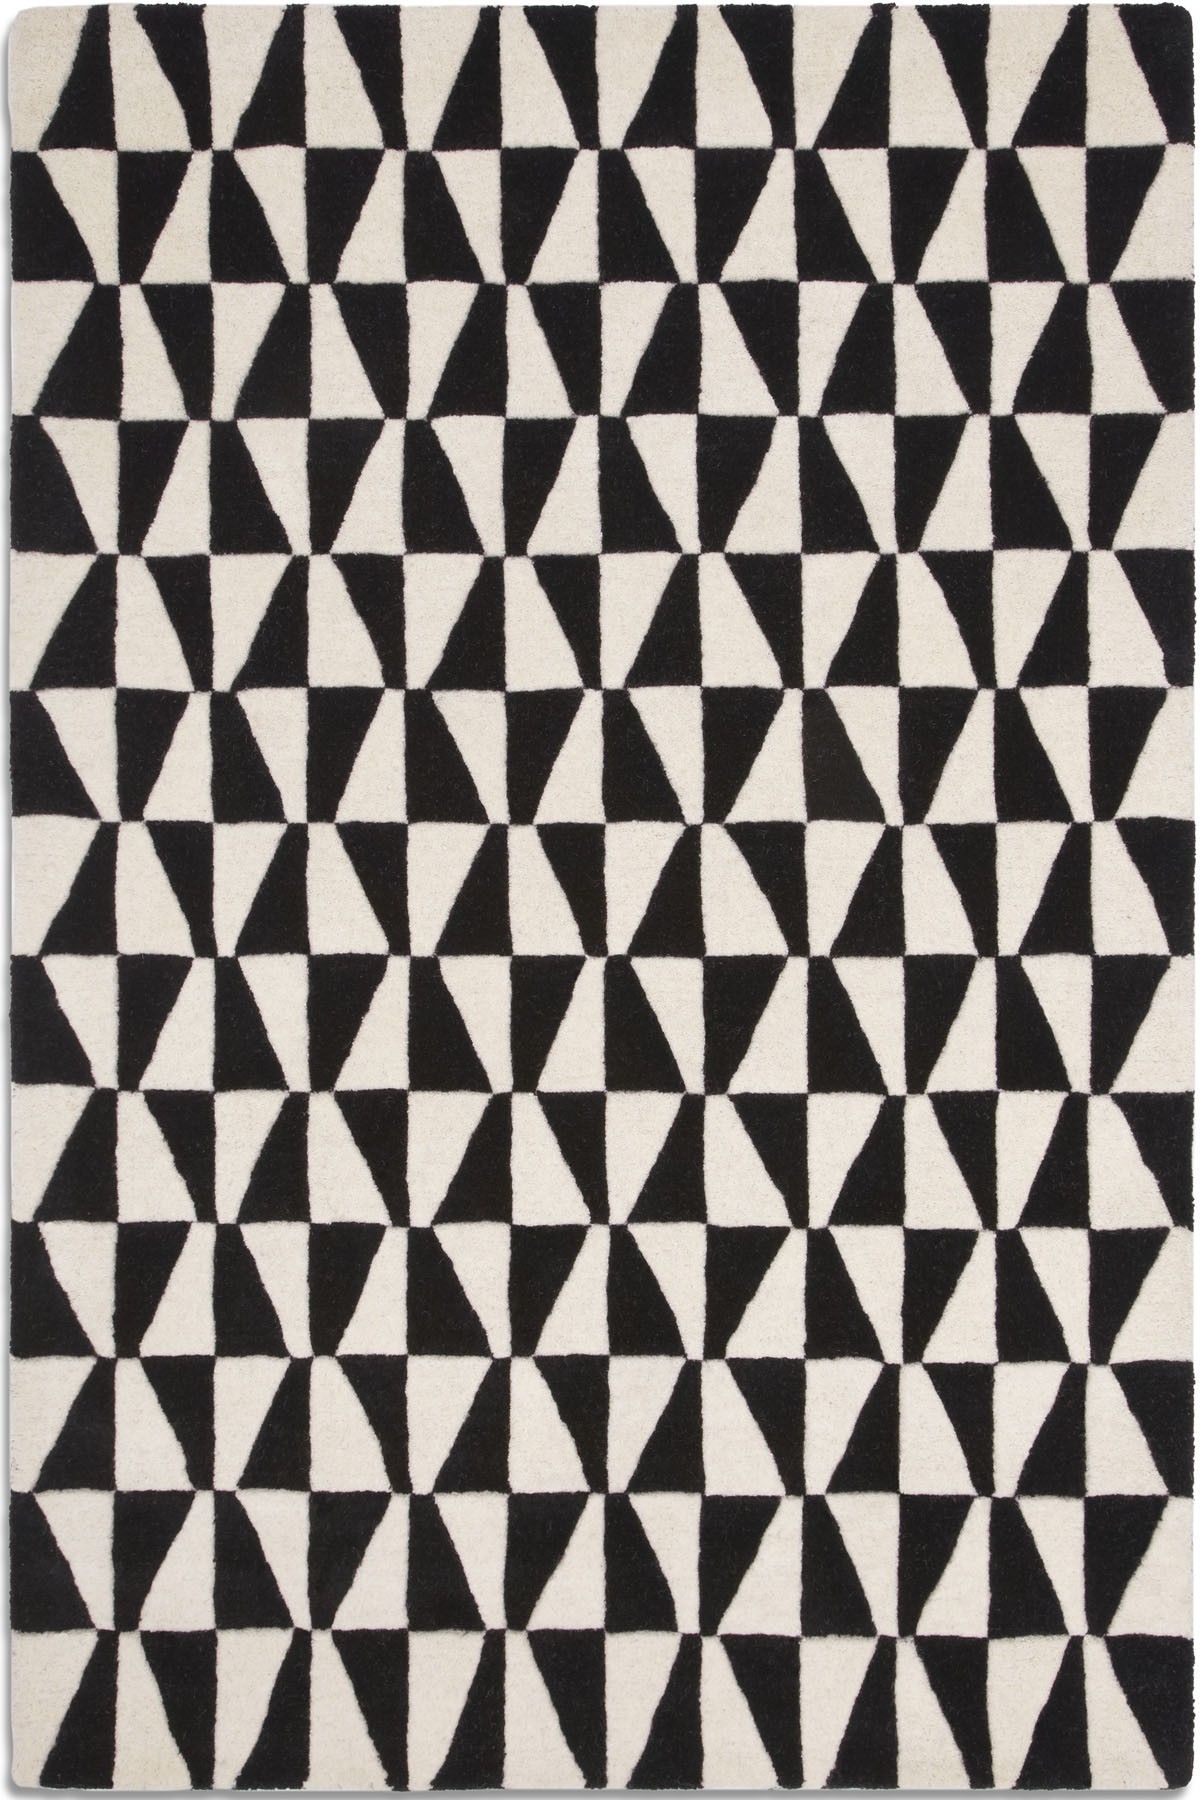 Geometric Carpet Carpet Awsa Within Geometric Carpet Patterns (View 12 of 15)